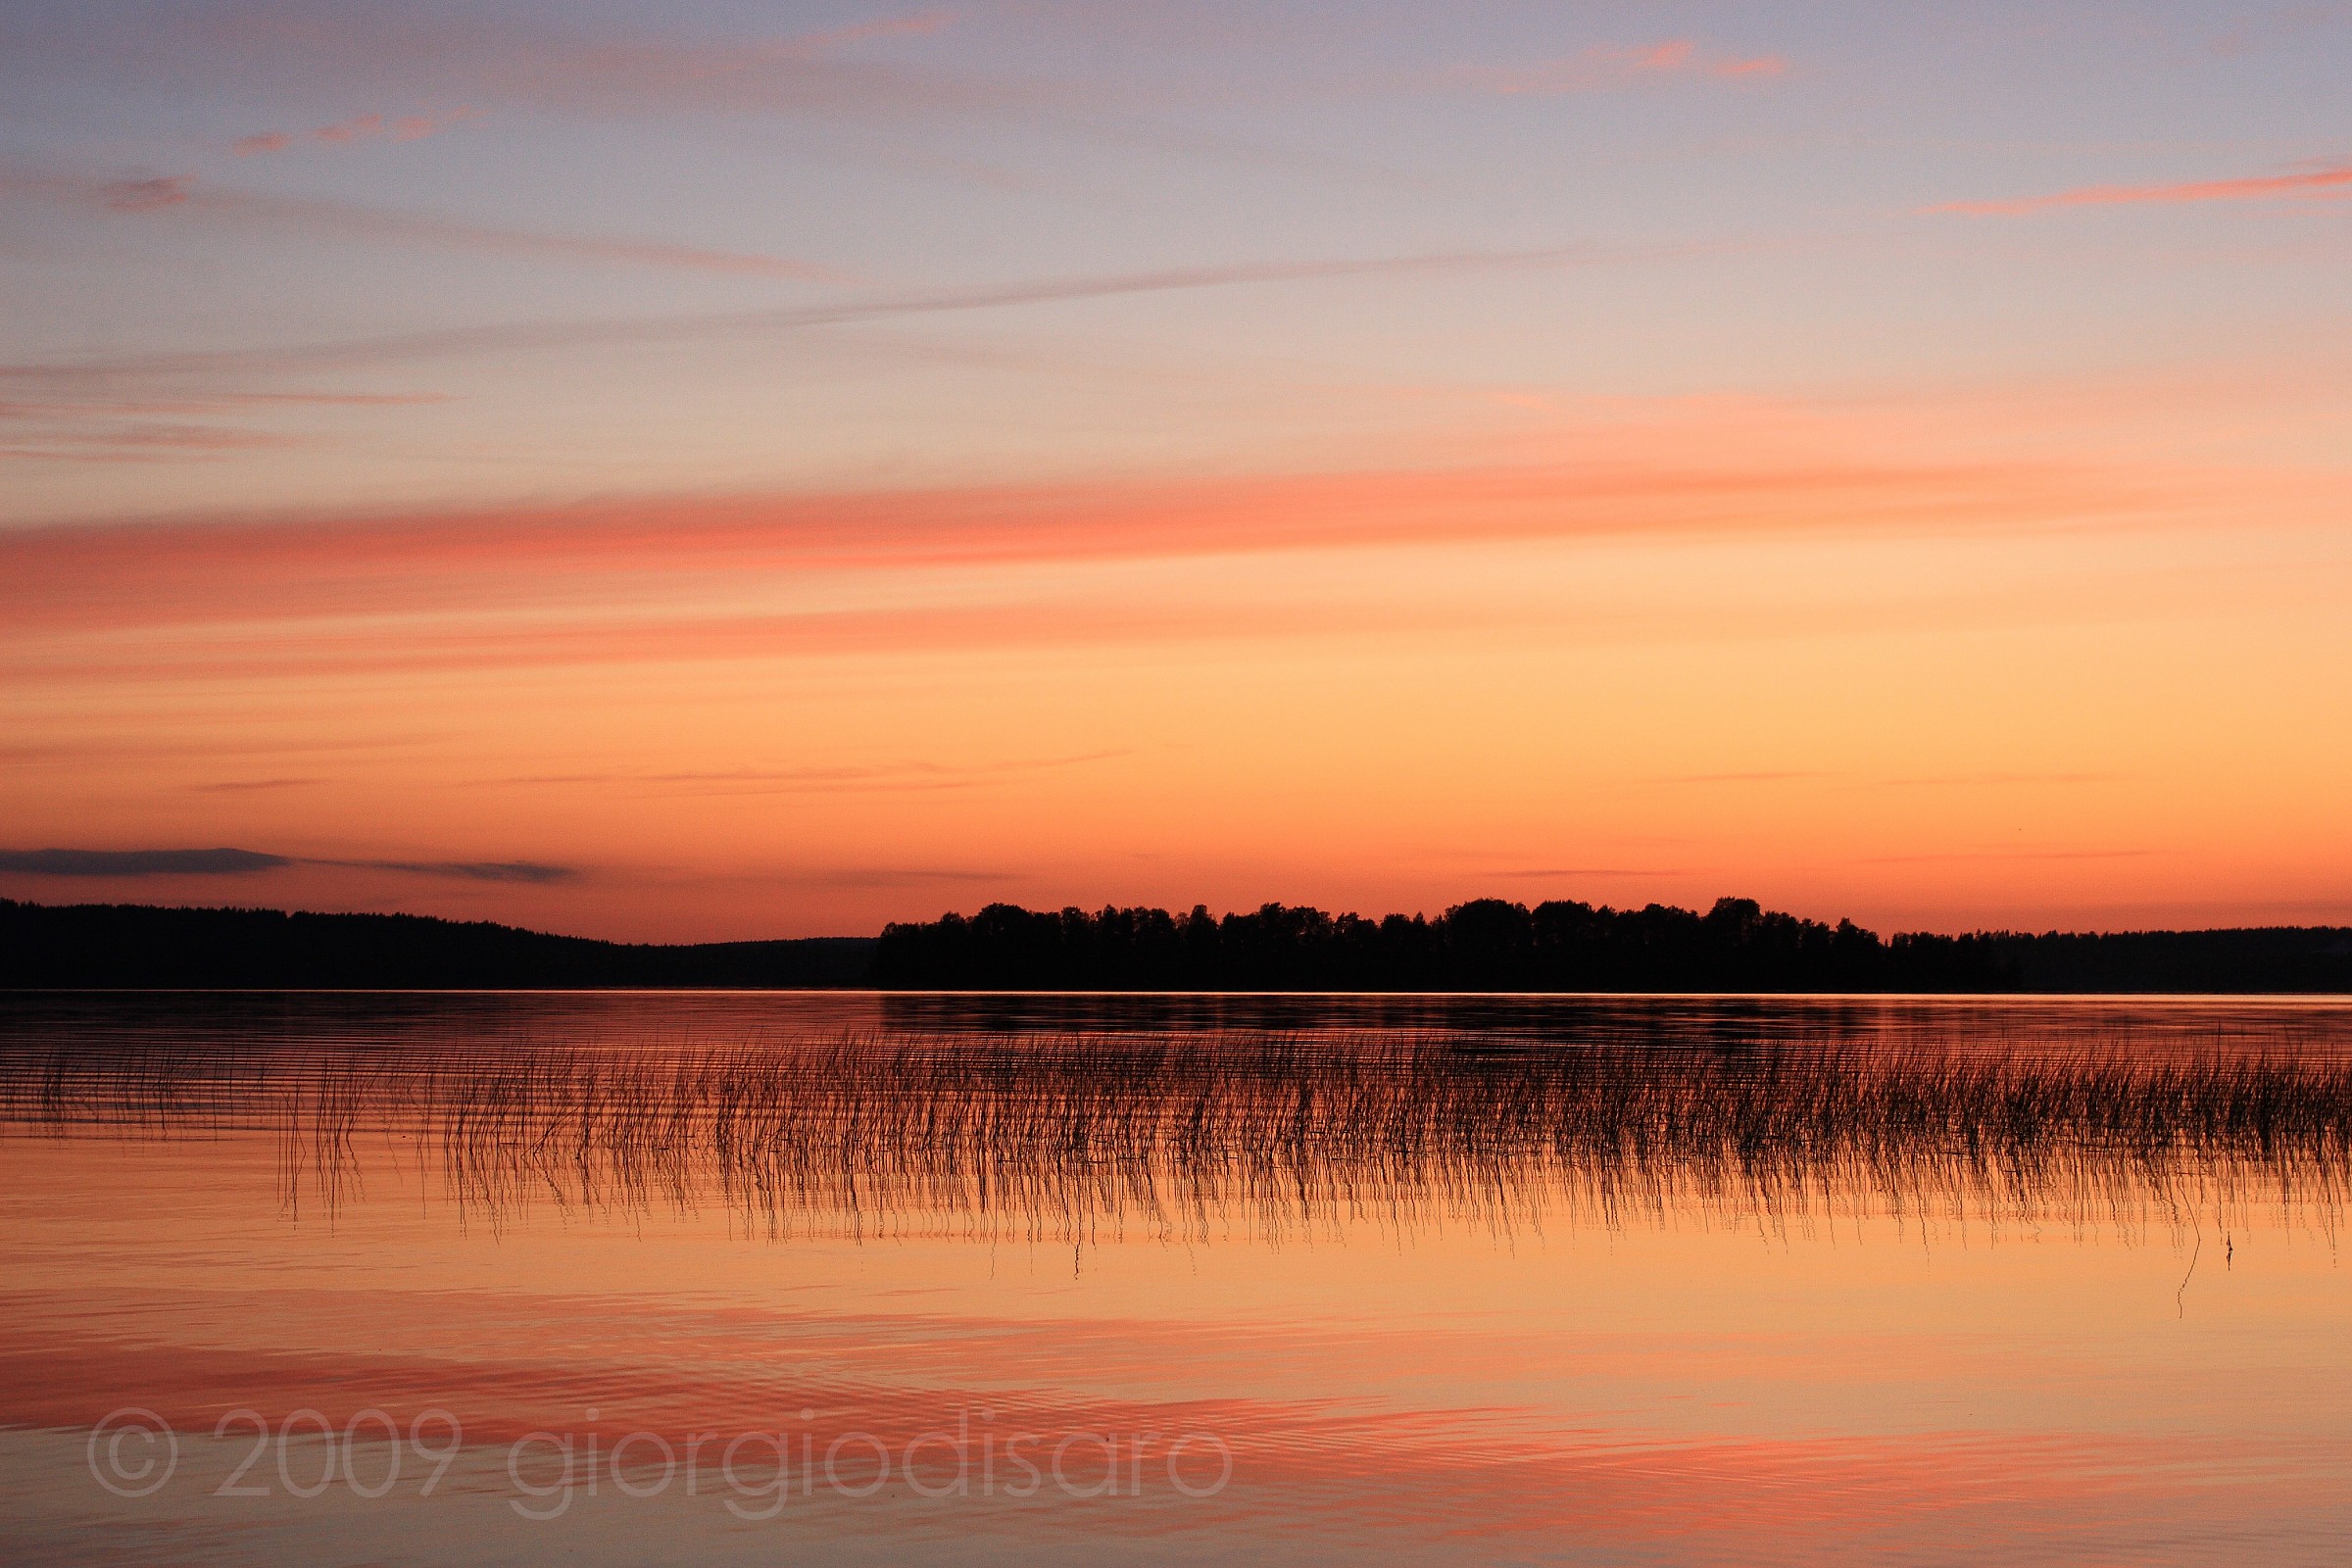 sunset on the lake...